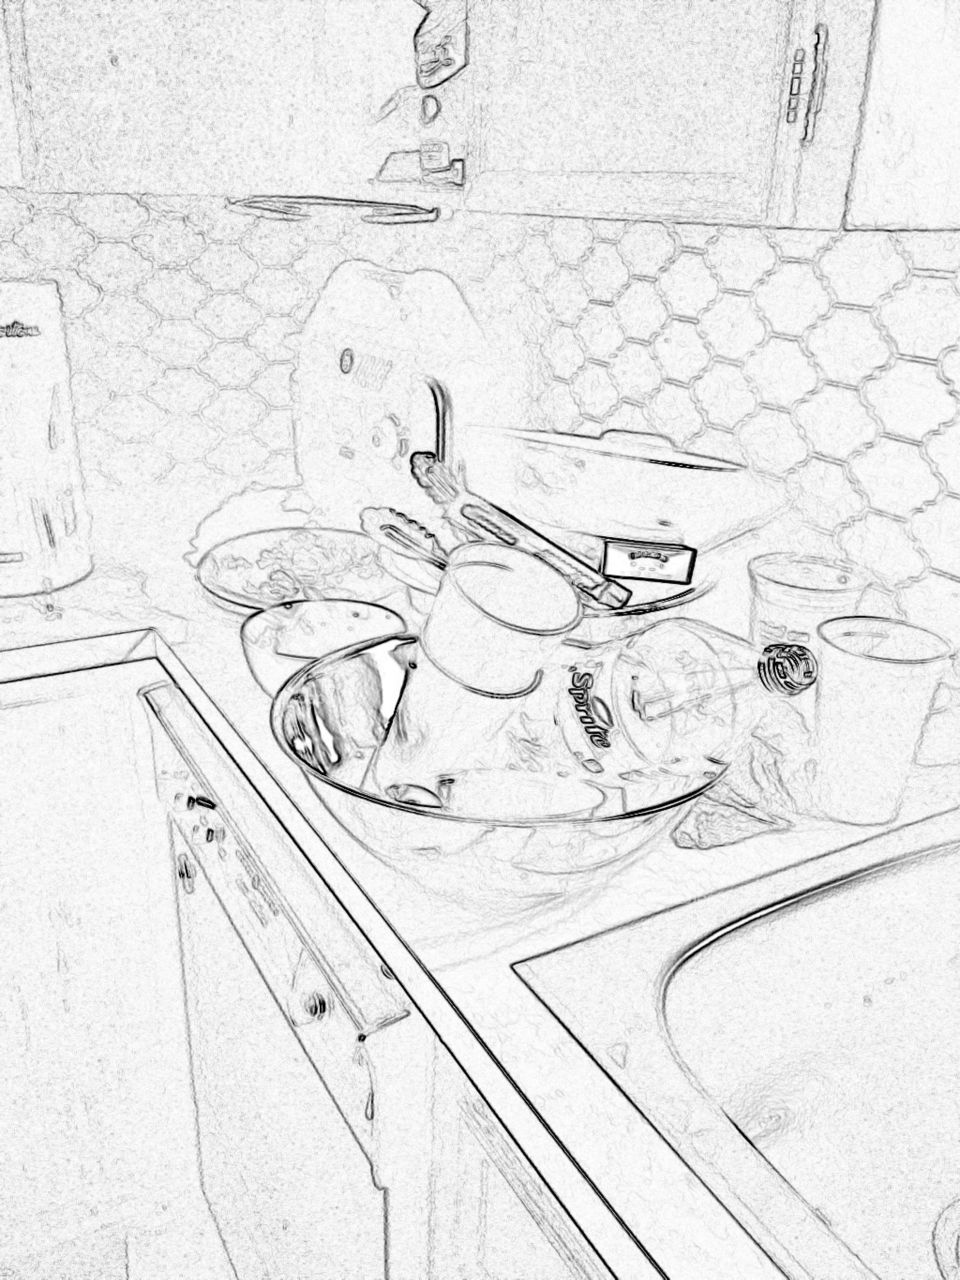 Dirty dishes - digital
Sketch 